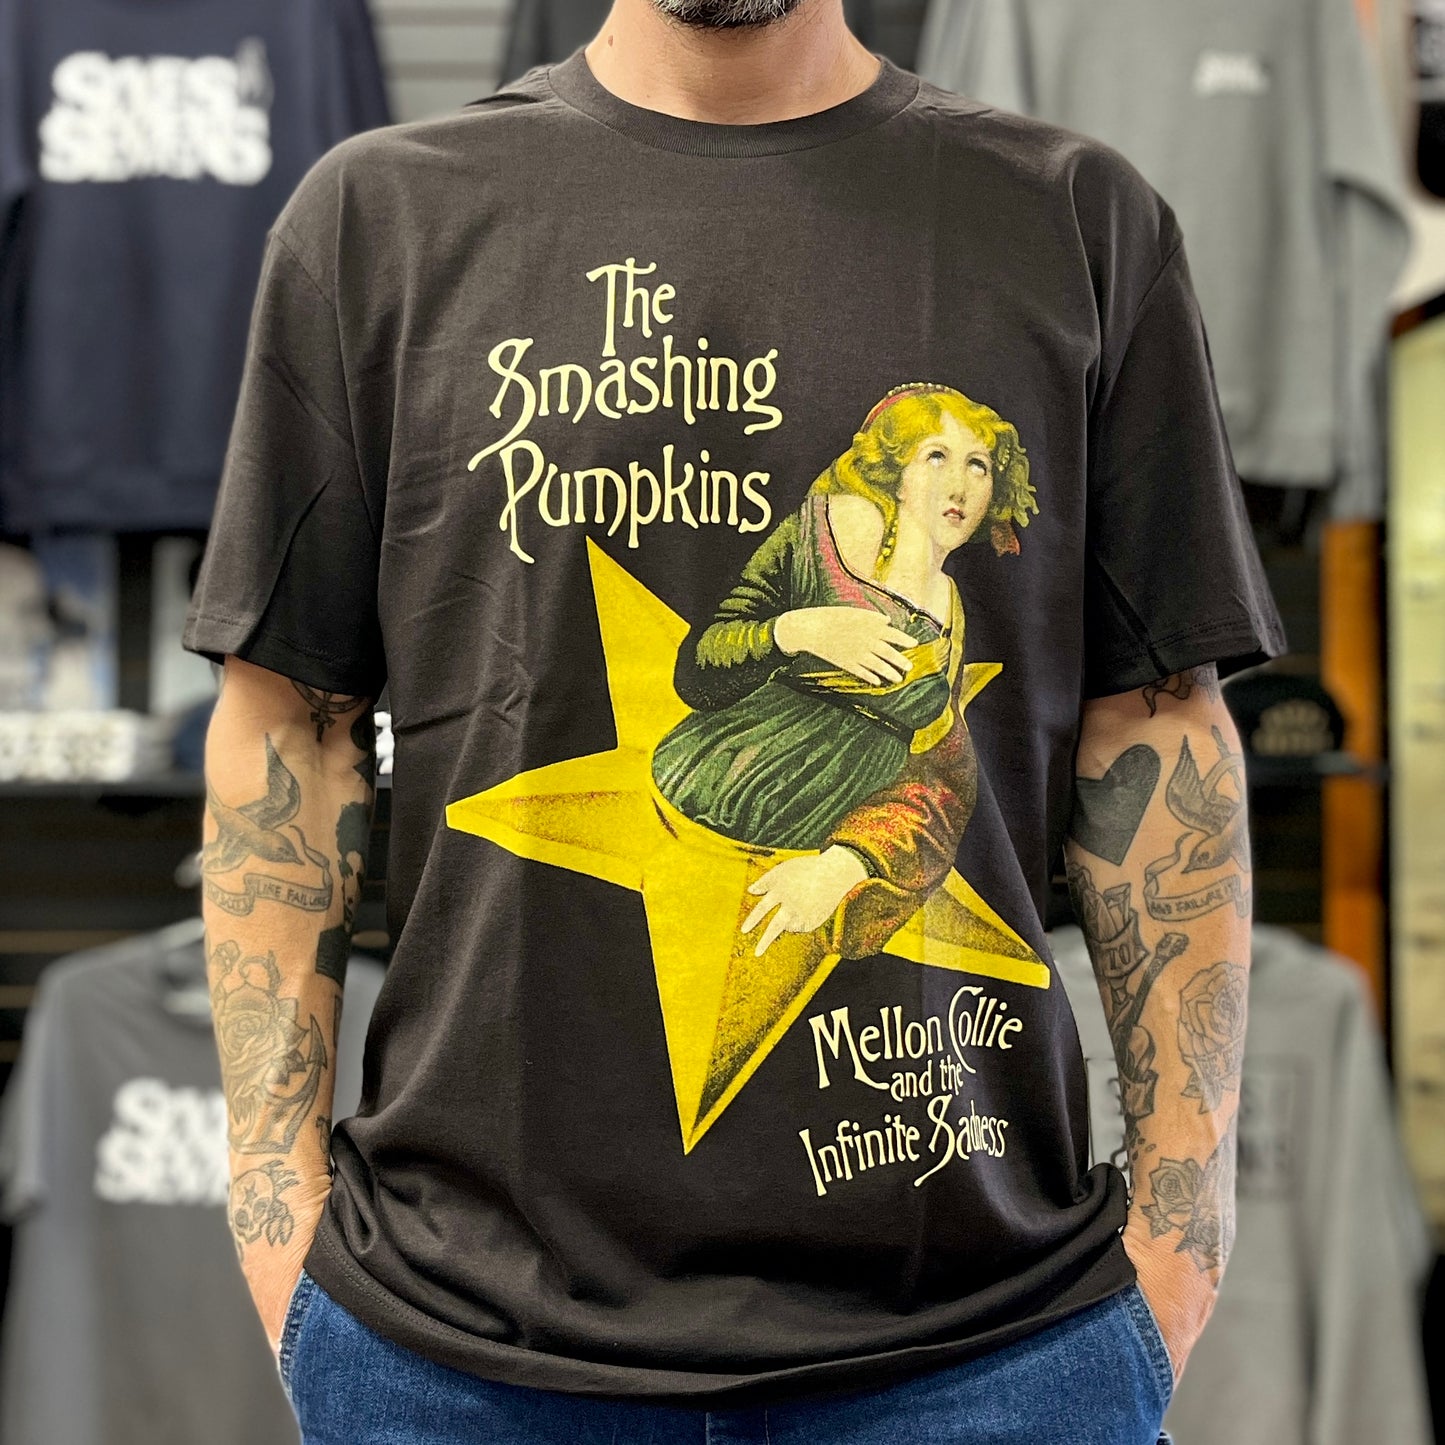 The Smashing Pumpkins T-Shirt - Mellon Collie